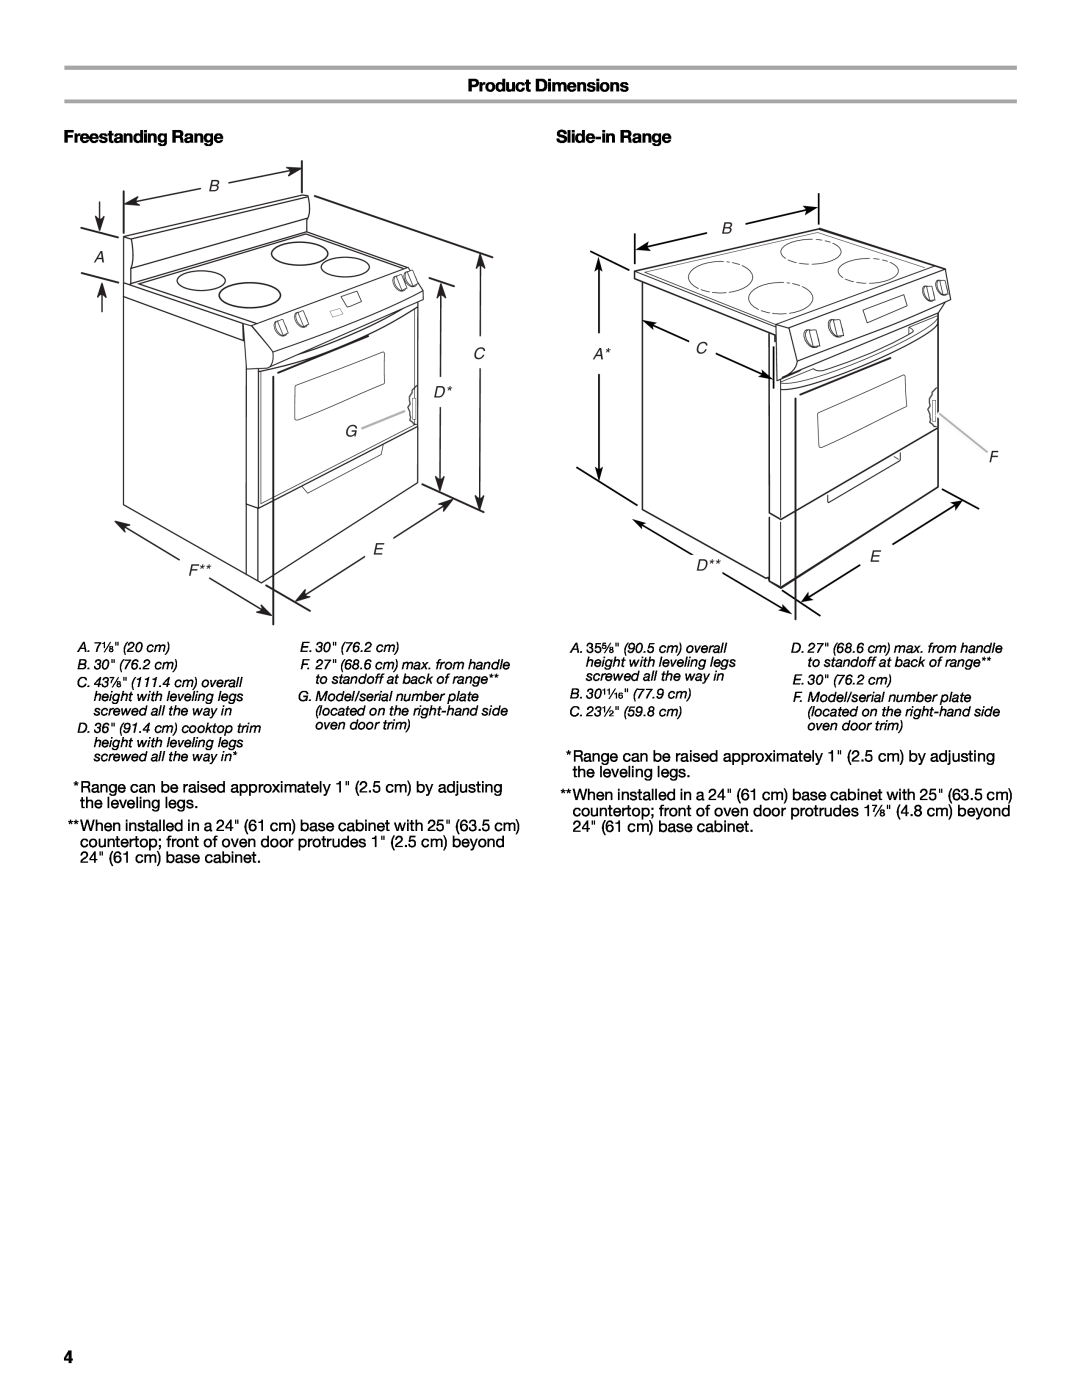 Whirlpool 9762035A installation instructions Product Dimensions, Freestanding Range, B A Ca D G, B C F, Slide-in Range 